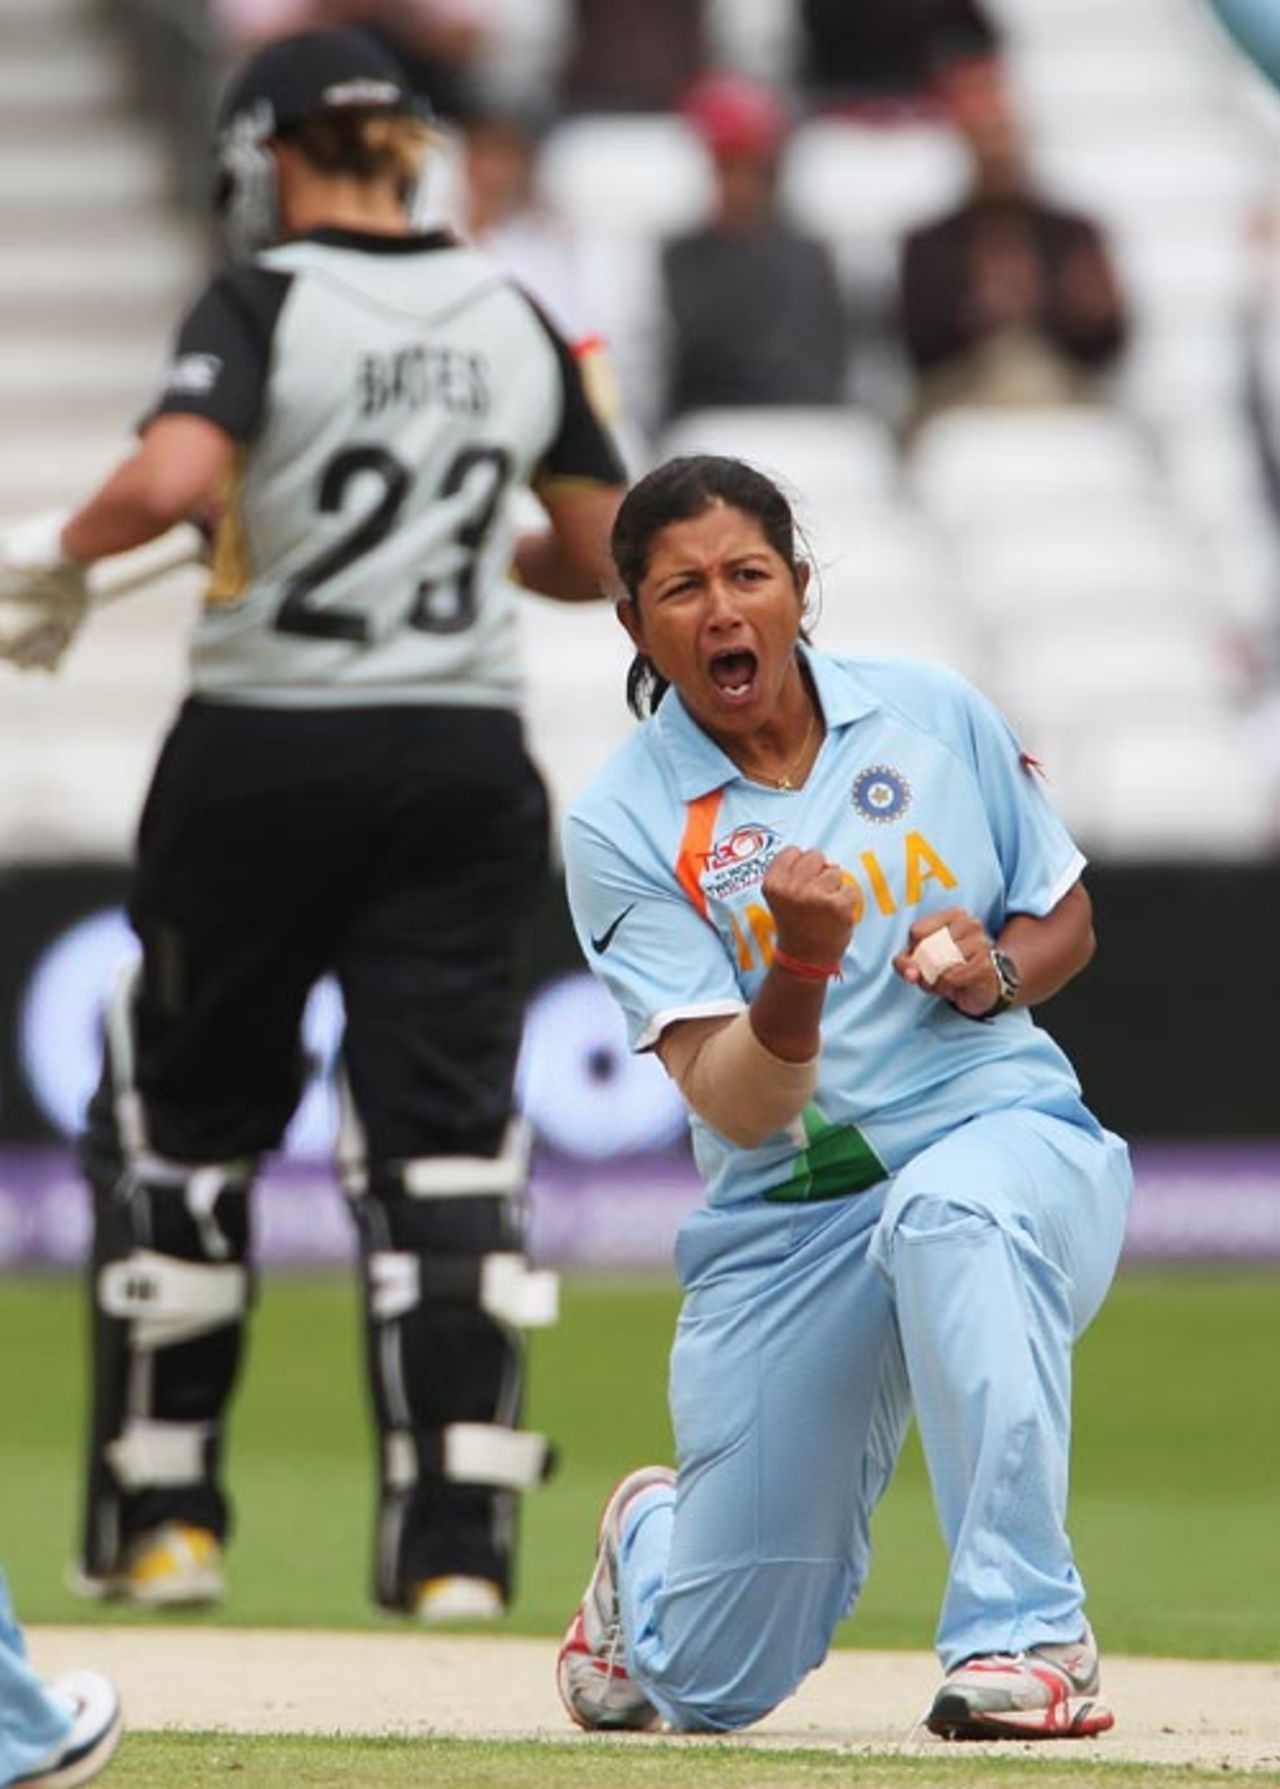 Rumeli Dhar celebrates Lucy Doolan's wicket, India v New Zealand, 1st semi-final, ICC Women's World Twenty20, Trent Bridge, June 18, 2009